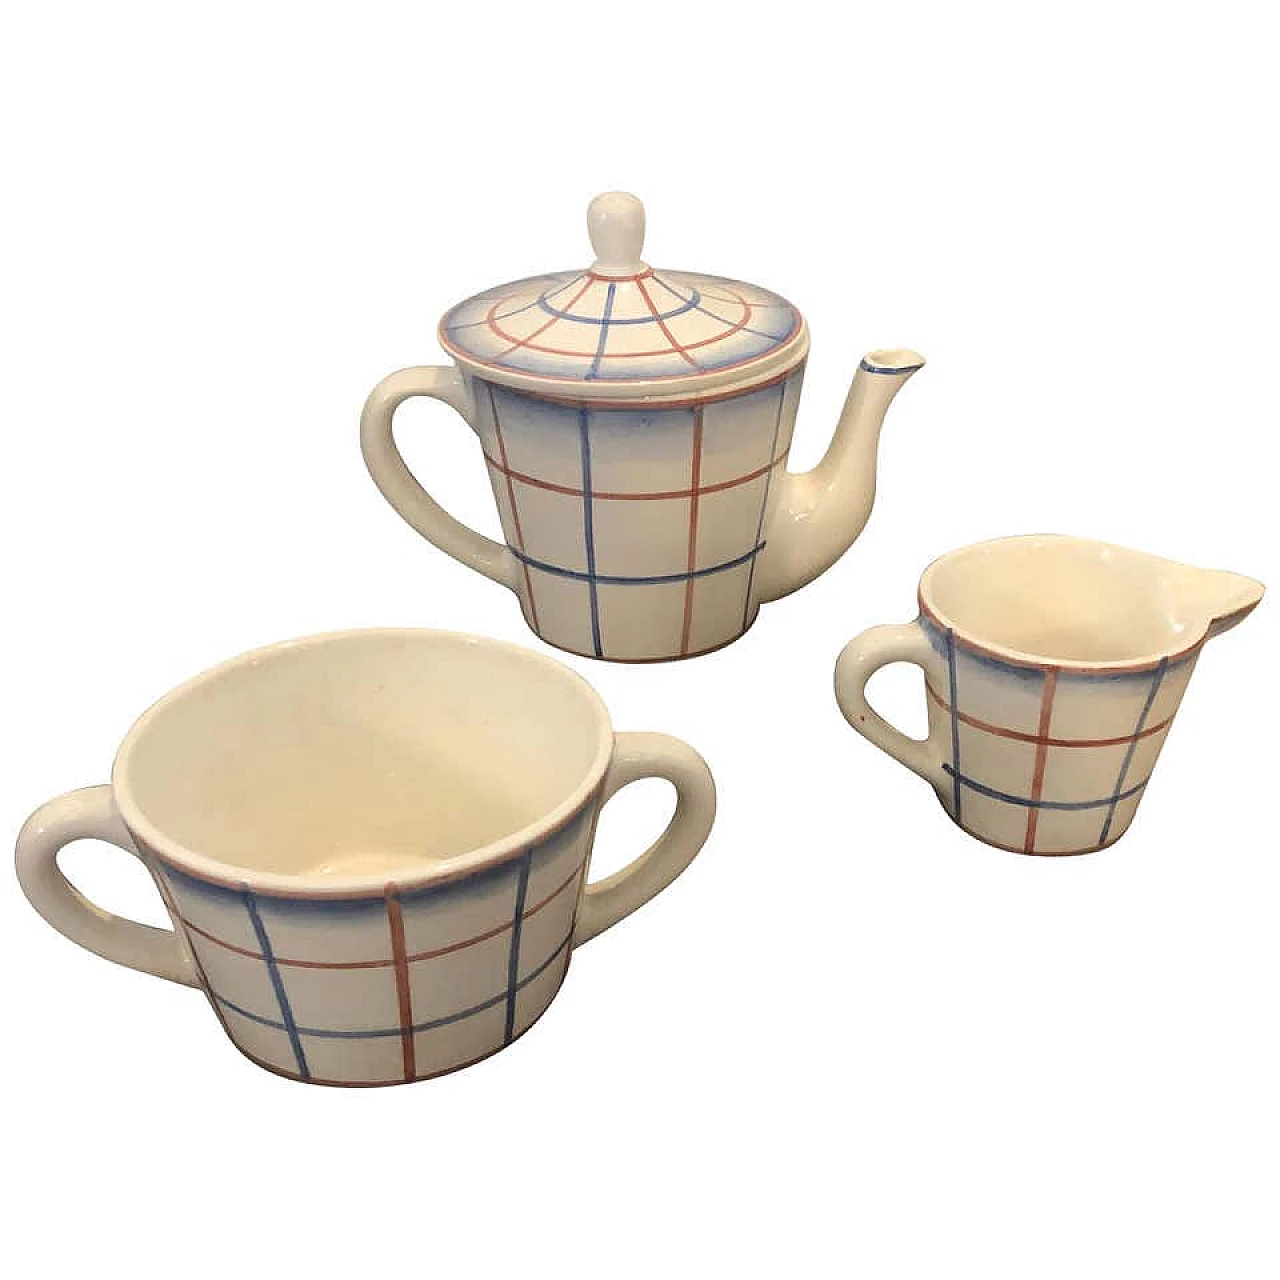 Art Deco ceramic tea set designed by Gio Ponti for Richard Ginori, 1930s 1140531